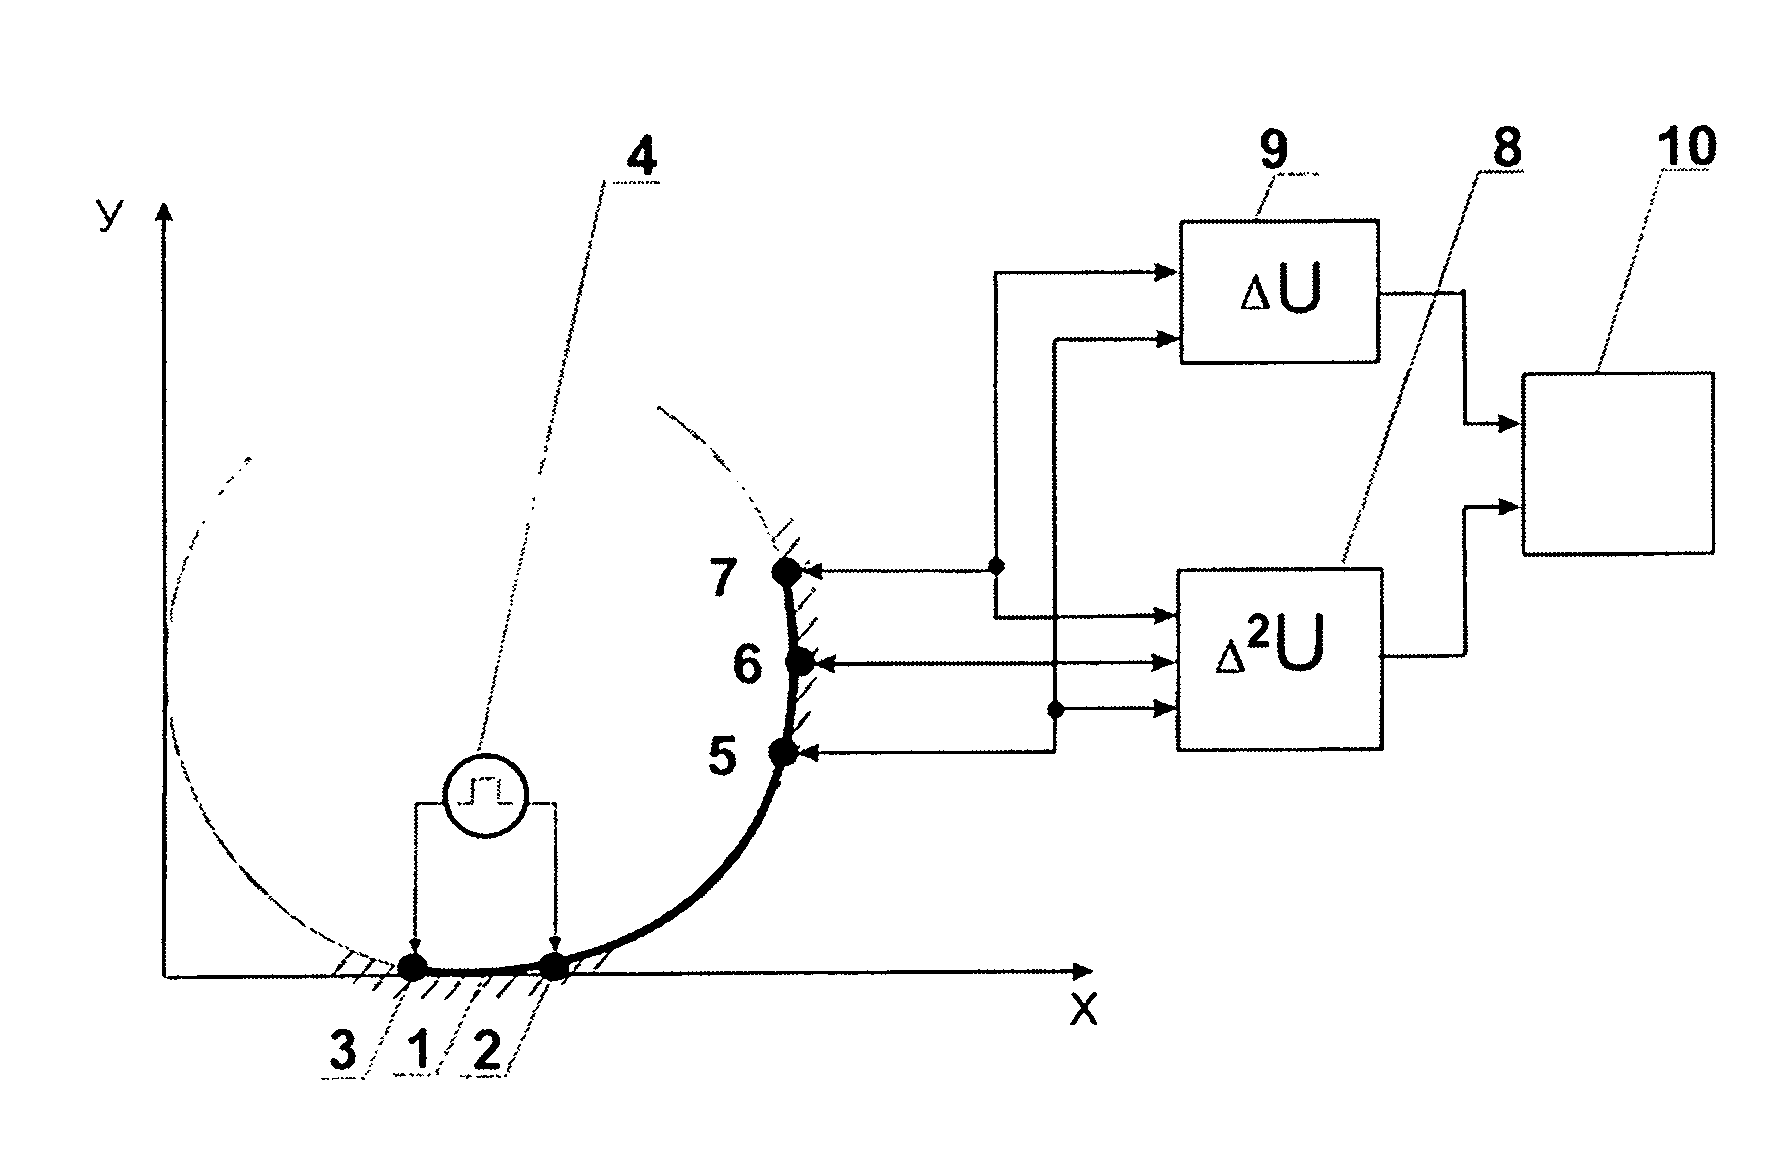 Method of marine electromagnetic survey using focusing electric current